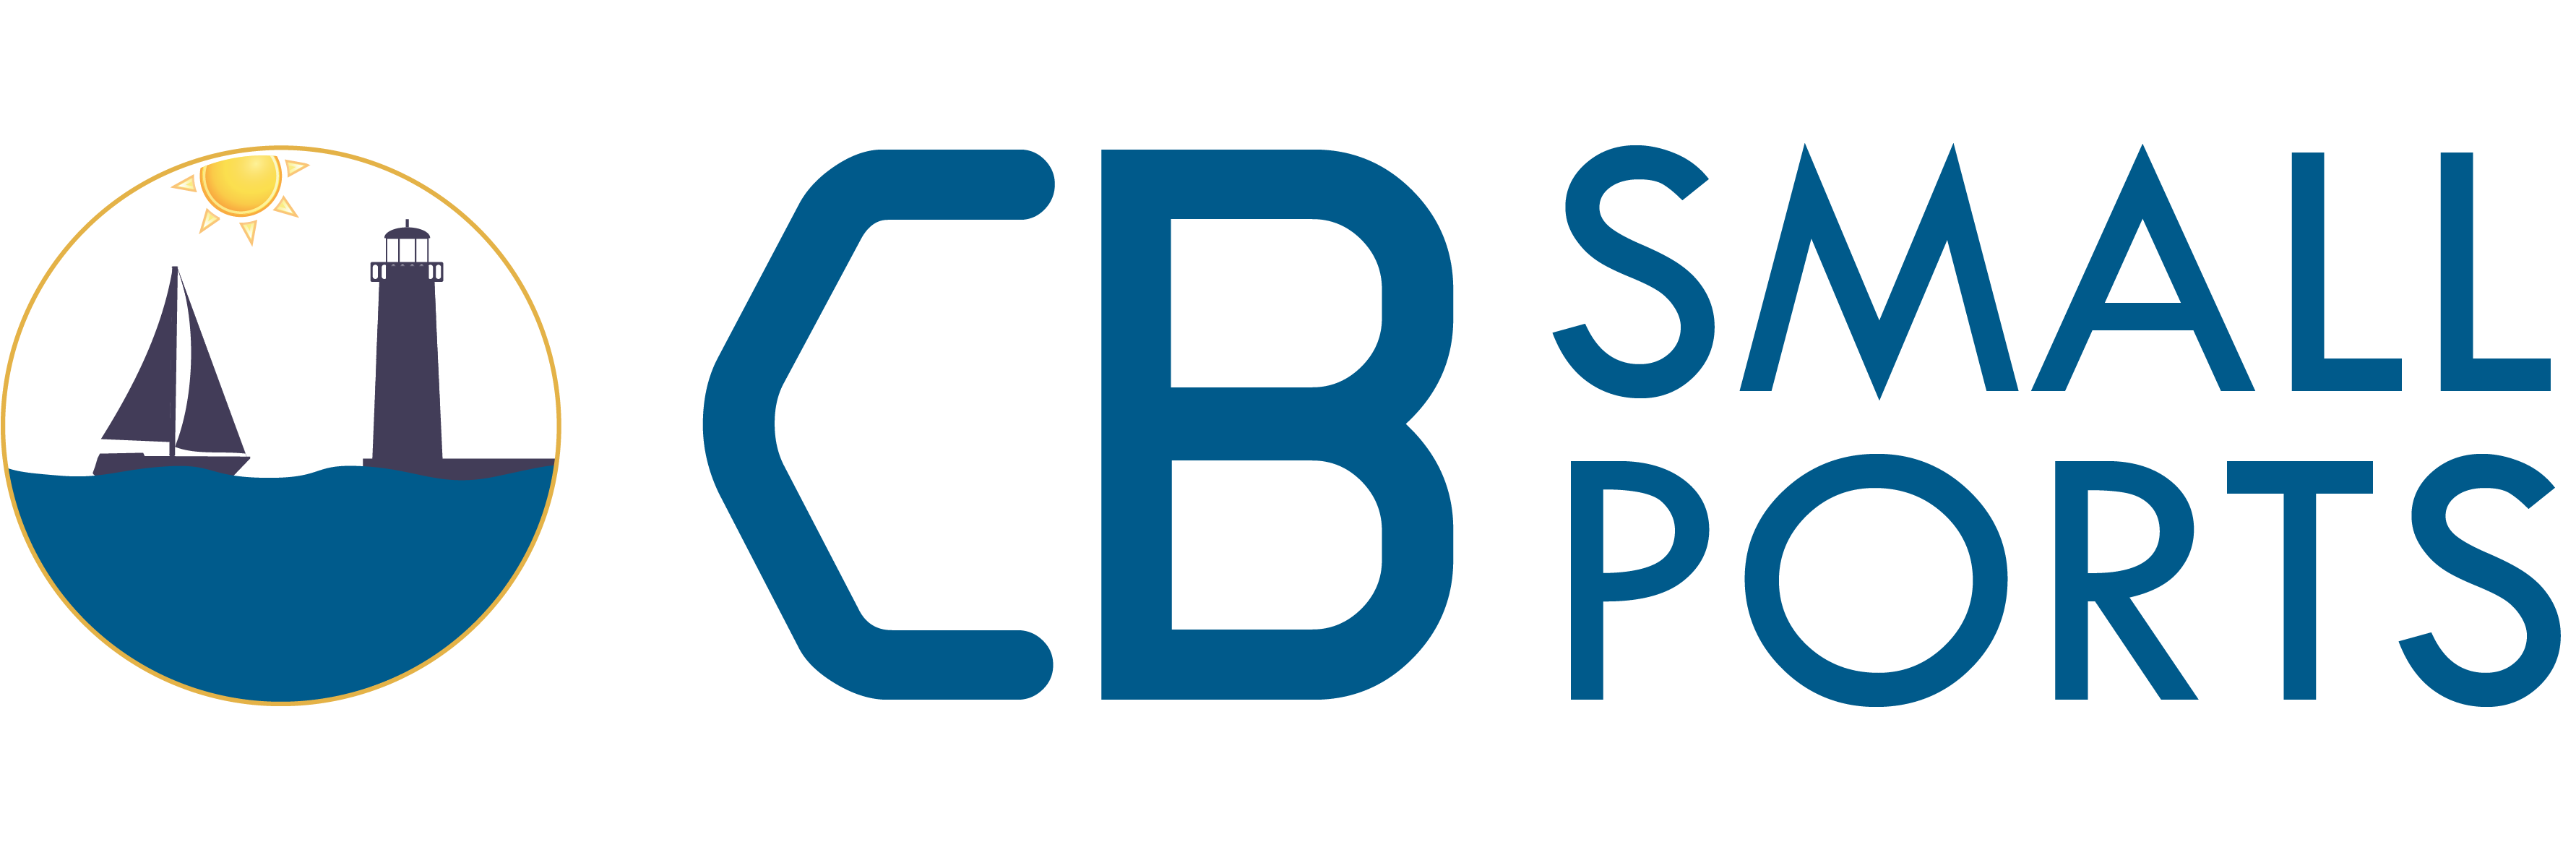 CB Small Ports logo.